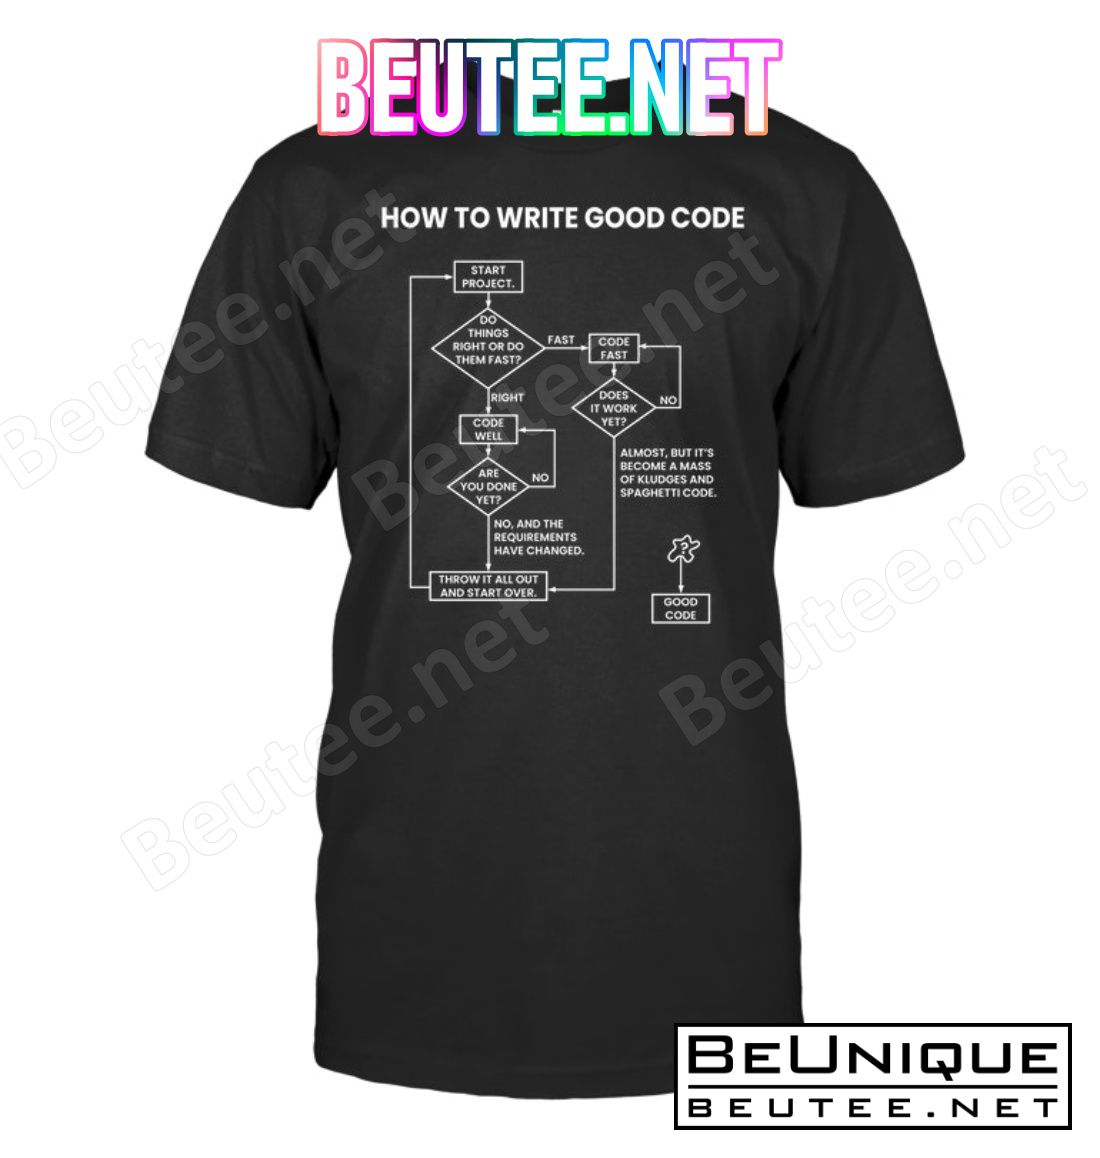 How To Write Good Code Shirt